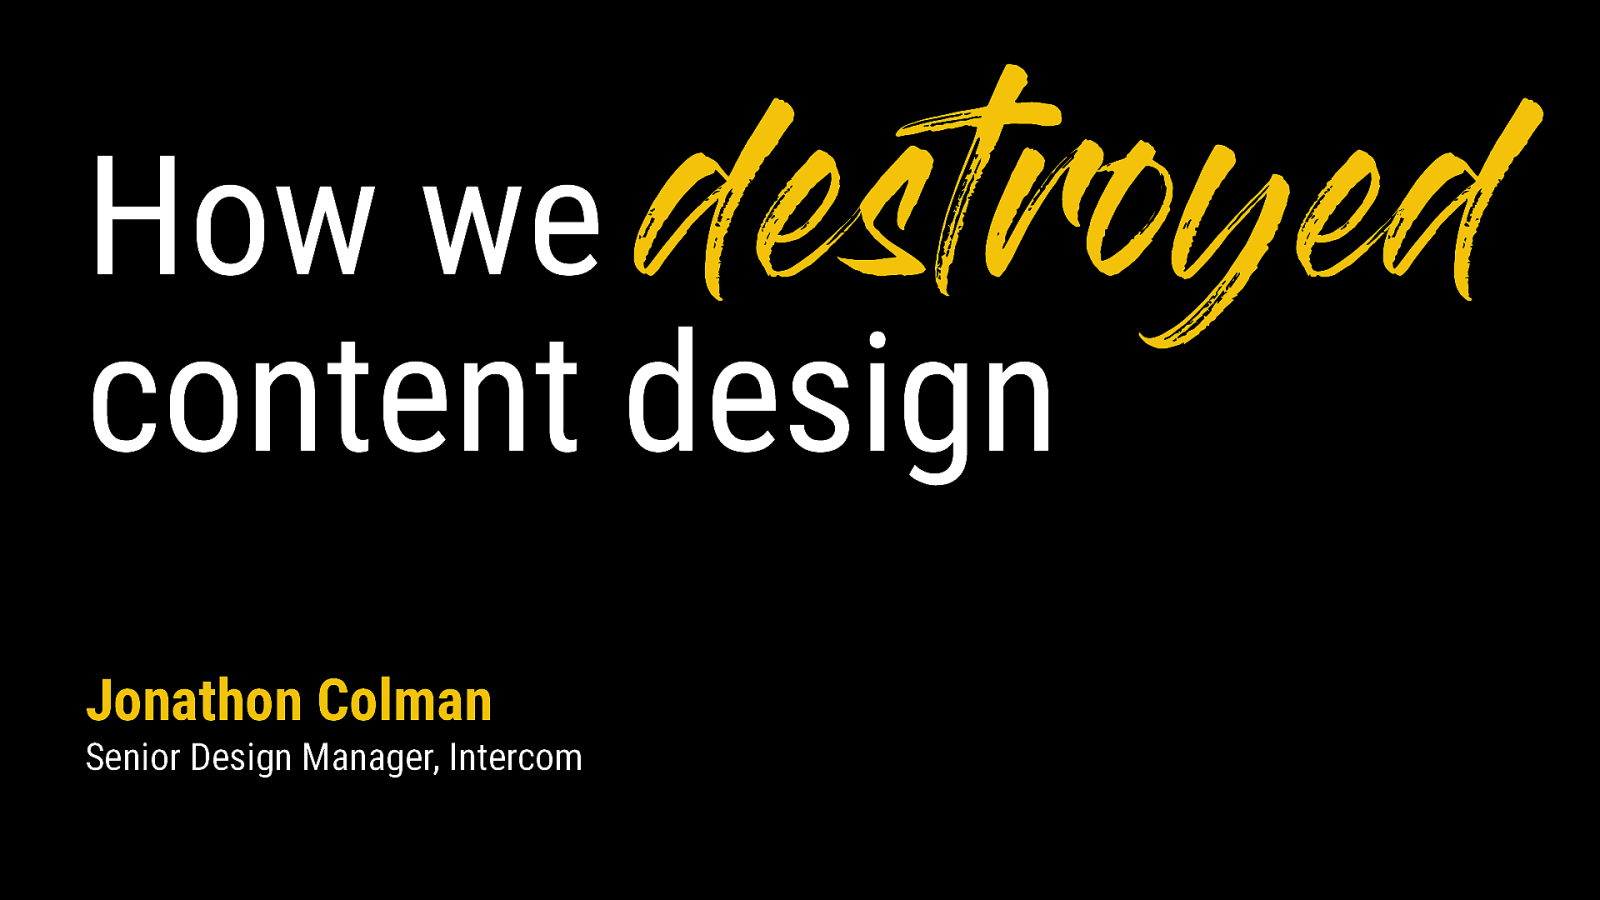 Keynote: How we destroyed content design